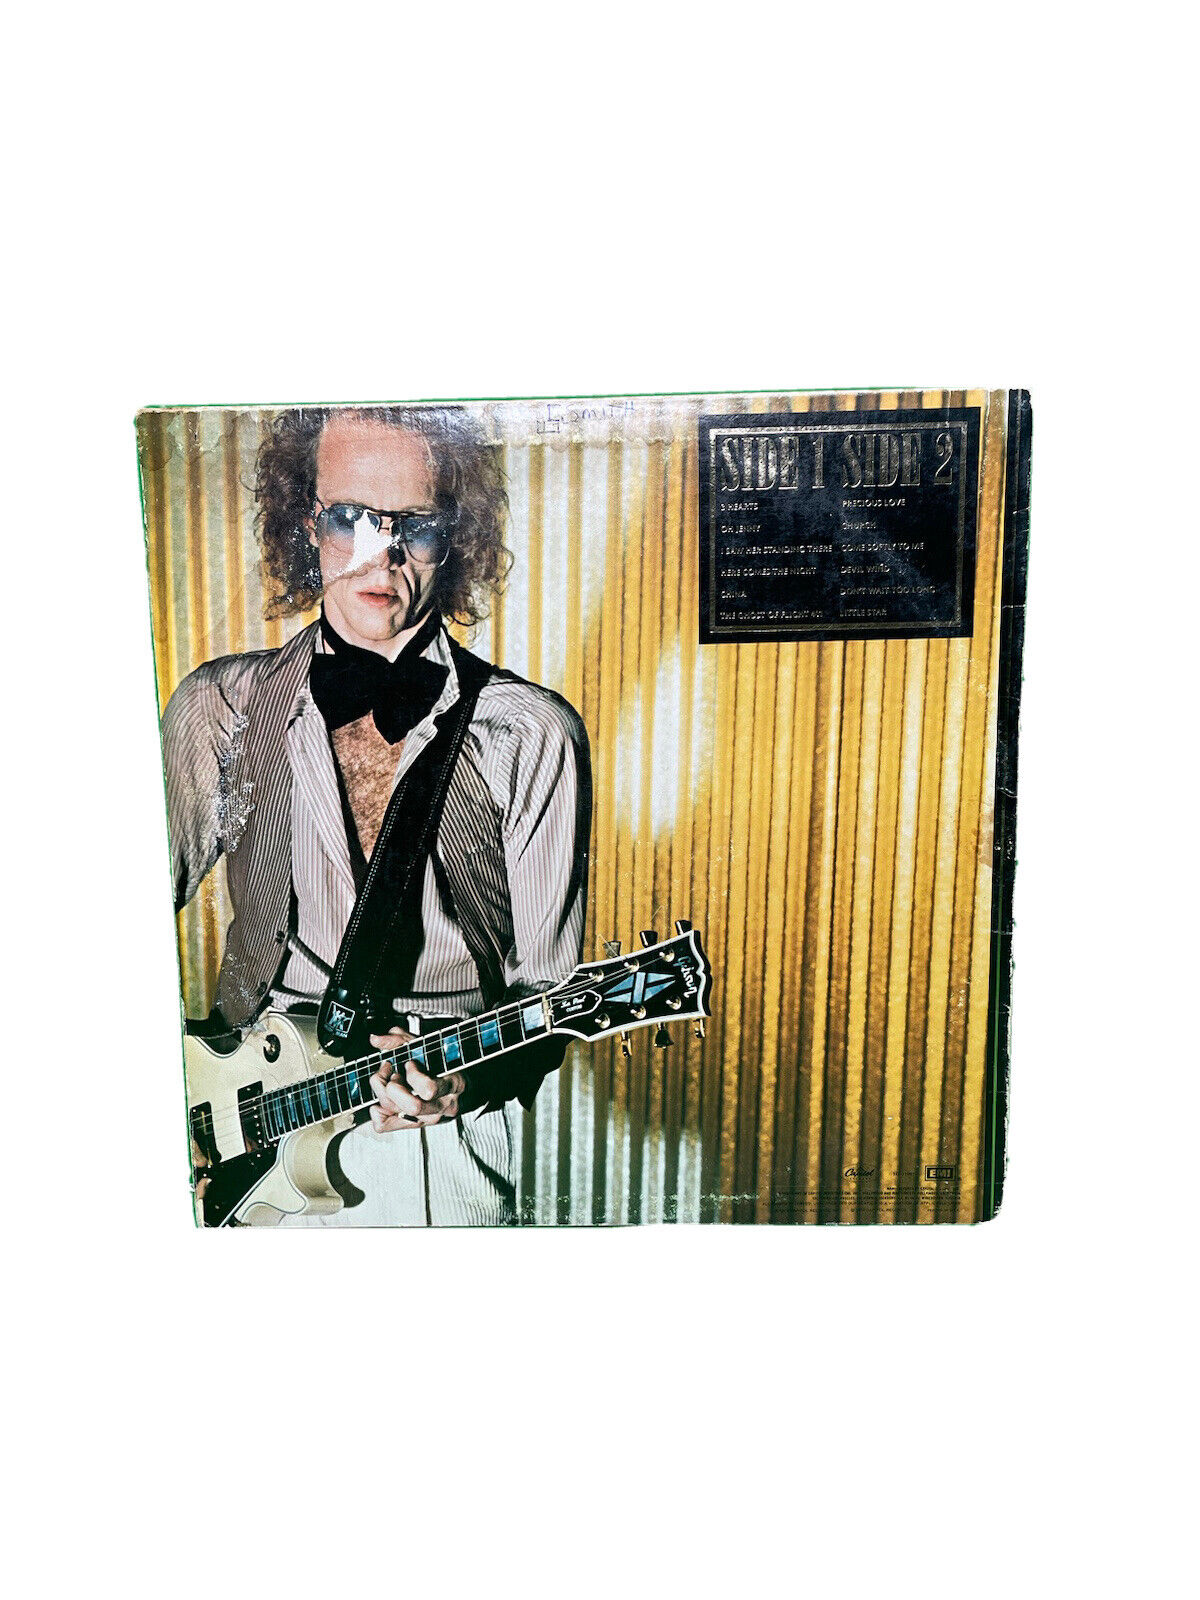 Bob Welch - Three Hearts Vinyl LP Album (1979) USA Import Rock G+ G+